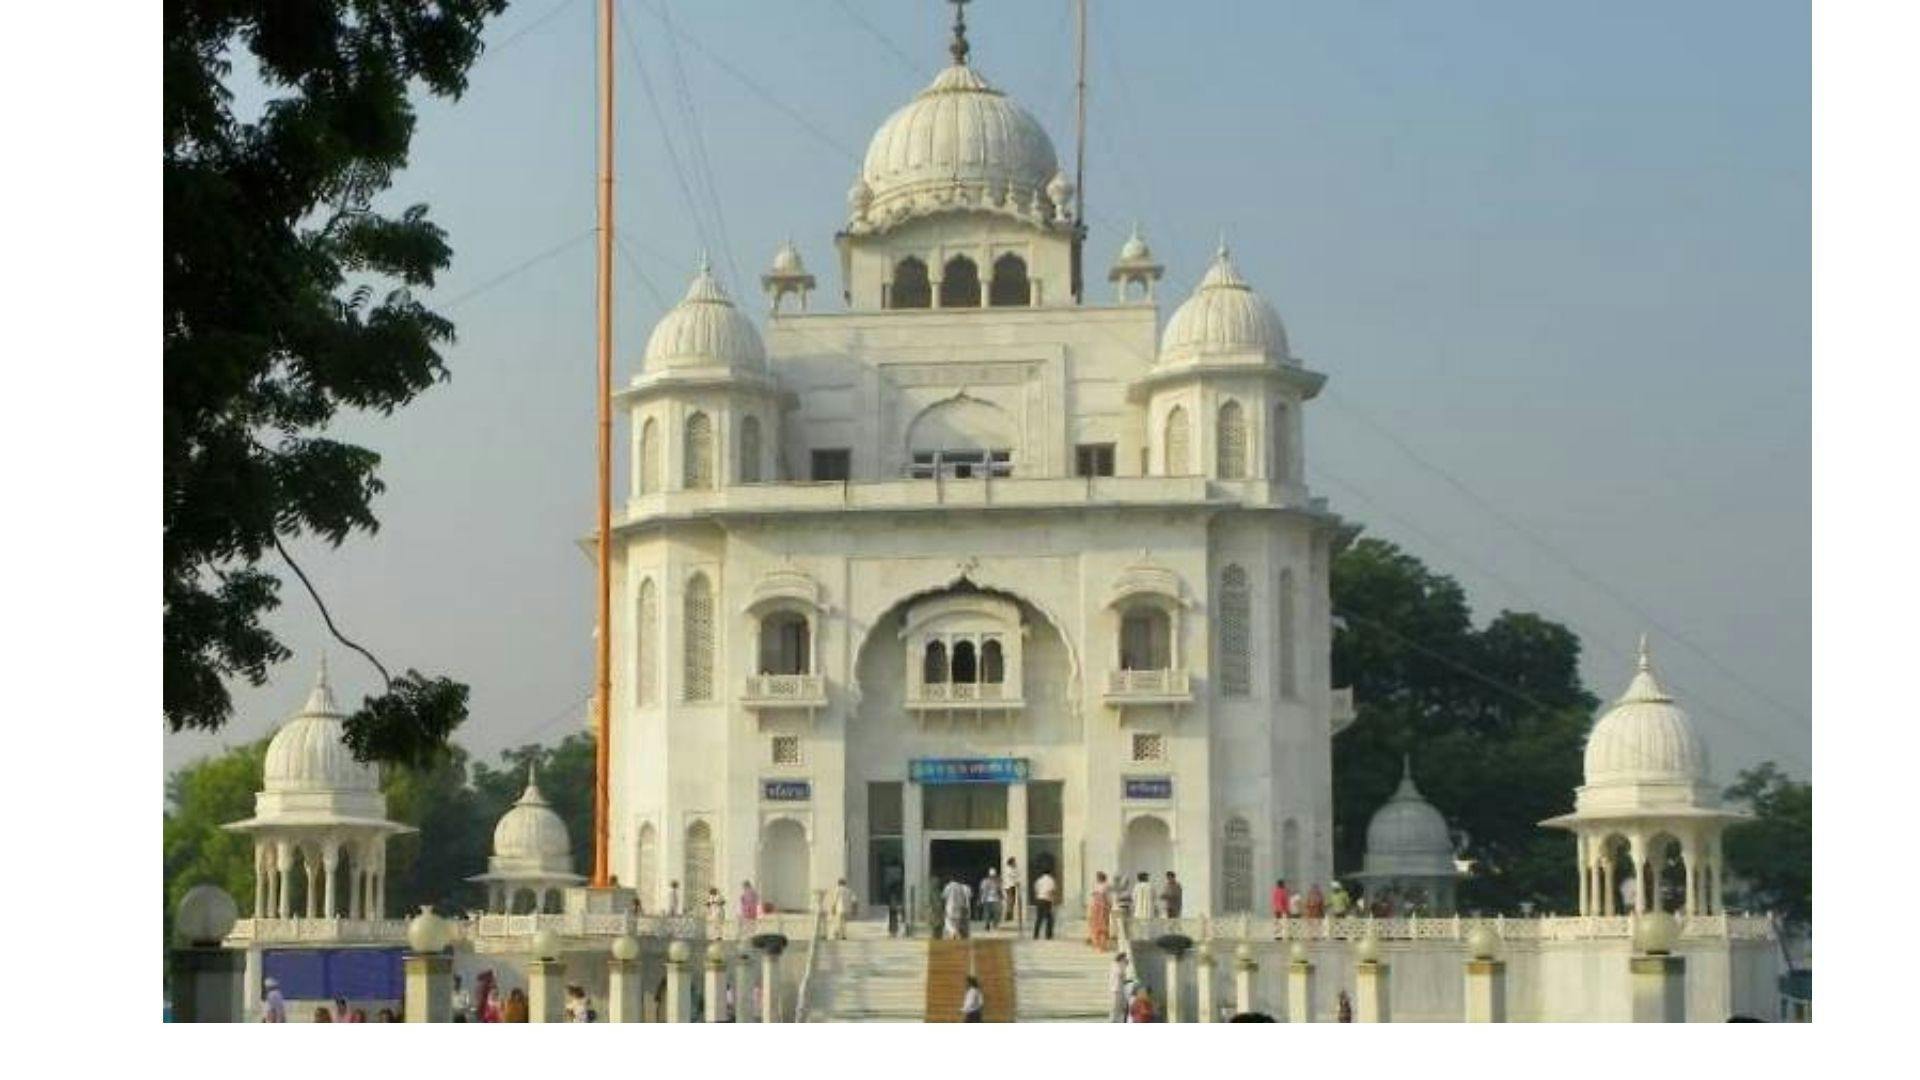 Gurdwara Gurdwara Rakab Ganj Sahib, Delhi - Built to commemorate the cremation of Guru Tegh Bahadur | Wikimedia Commons